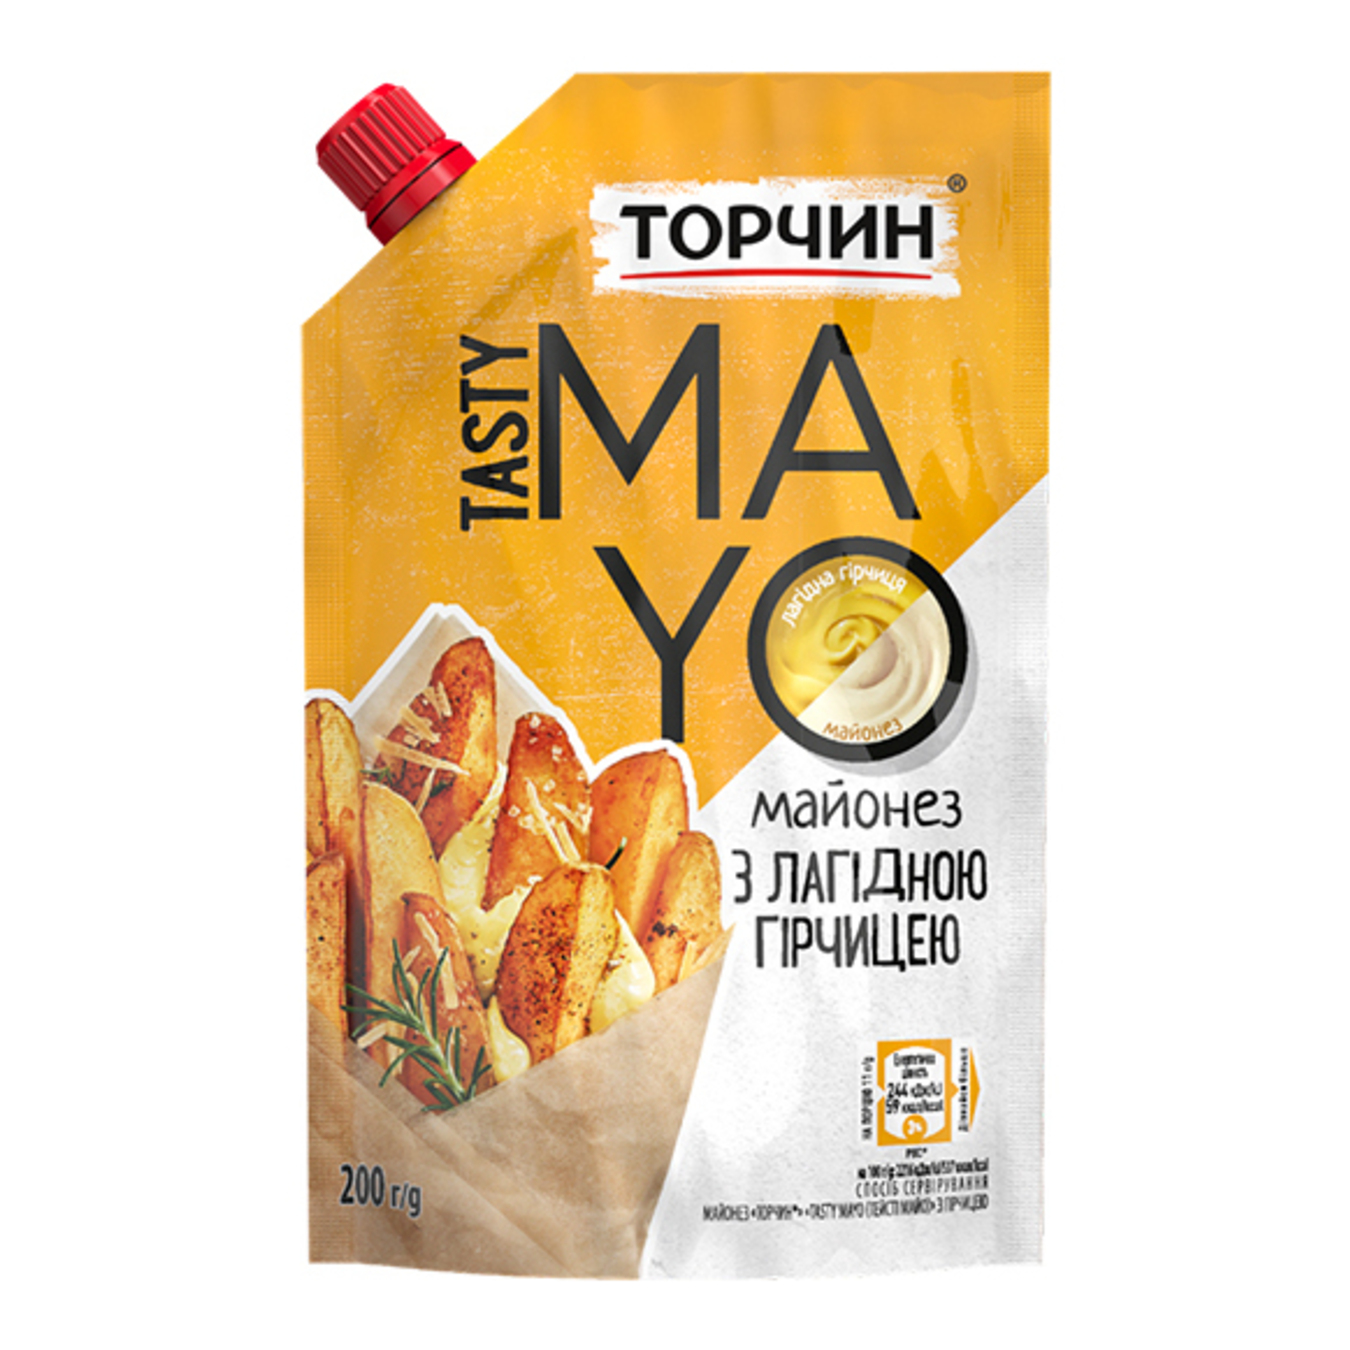 Torchyn Tasty Mayo Mayonnaise with Mustard 200g